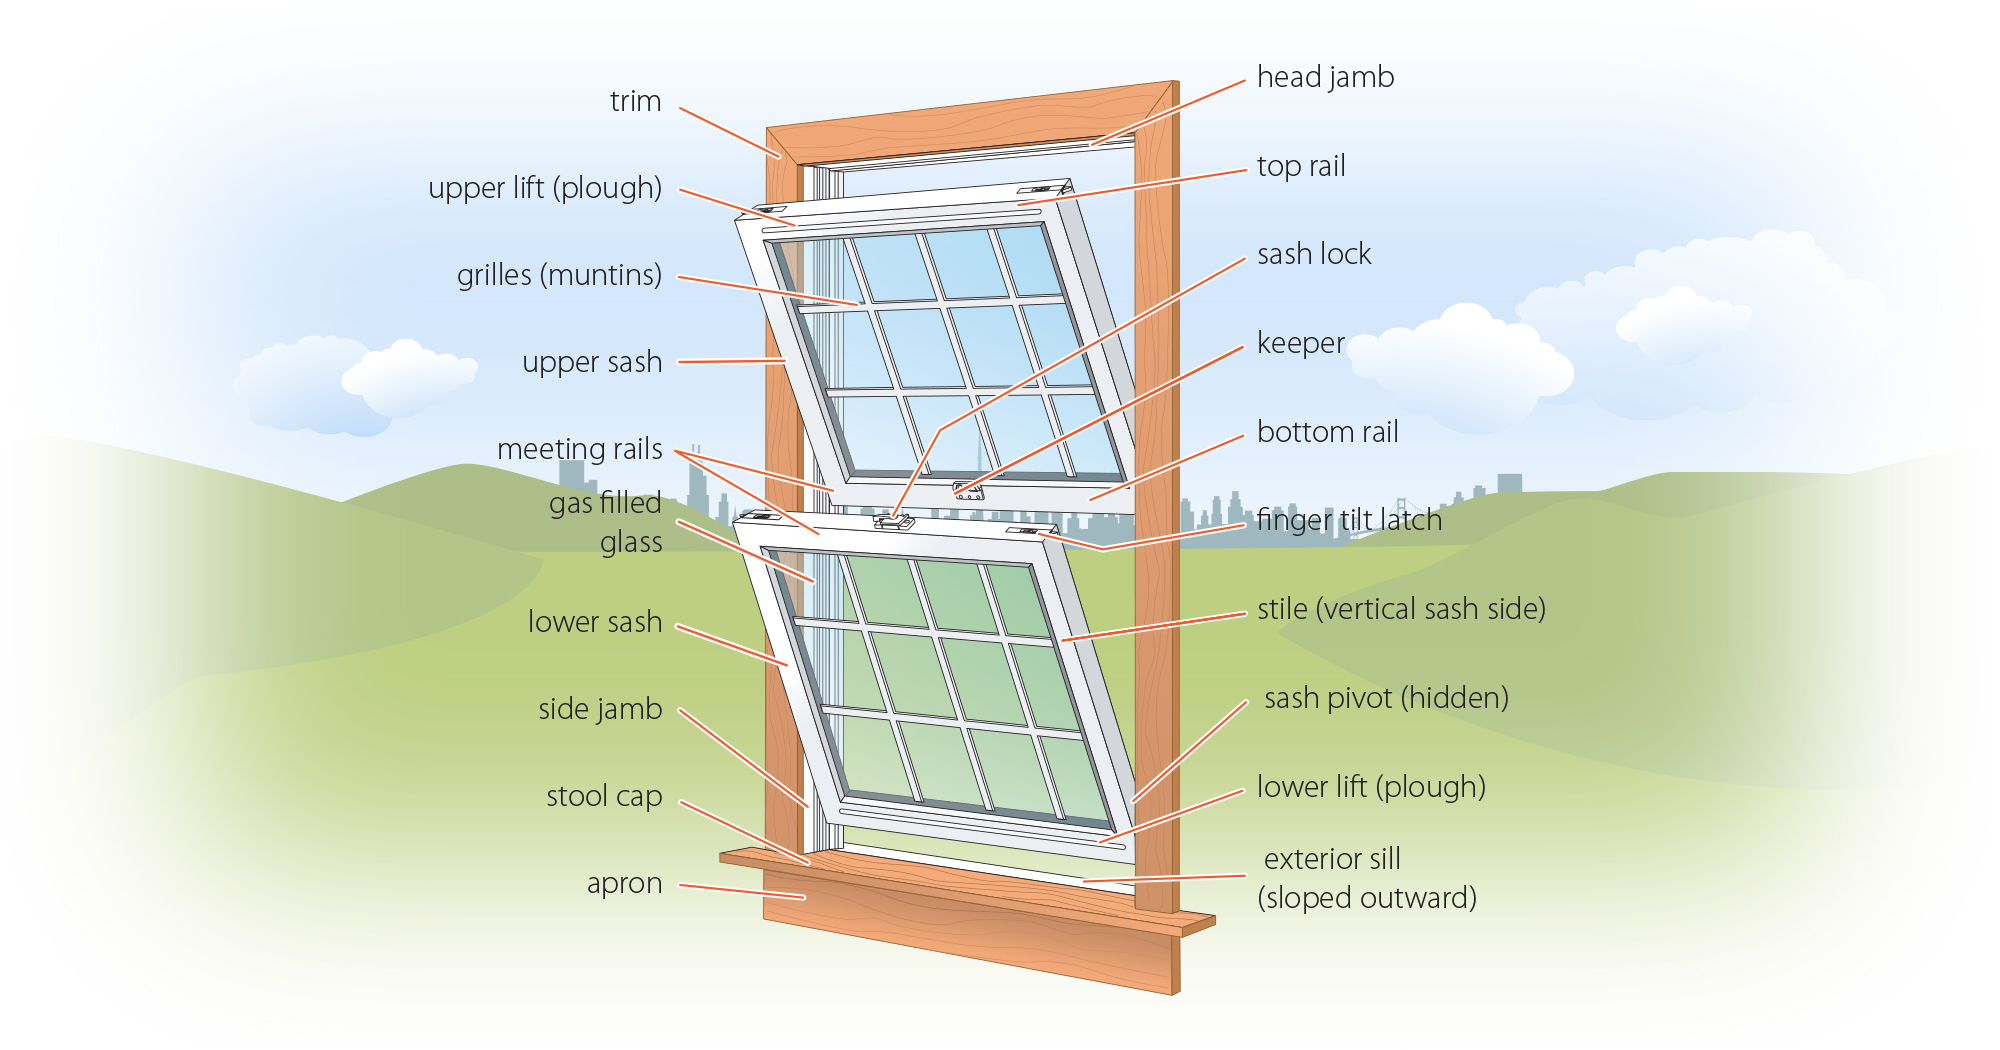 Anatomy of a window - interior view